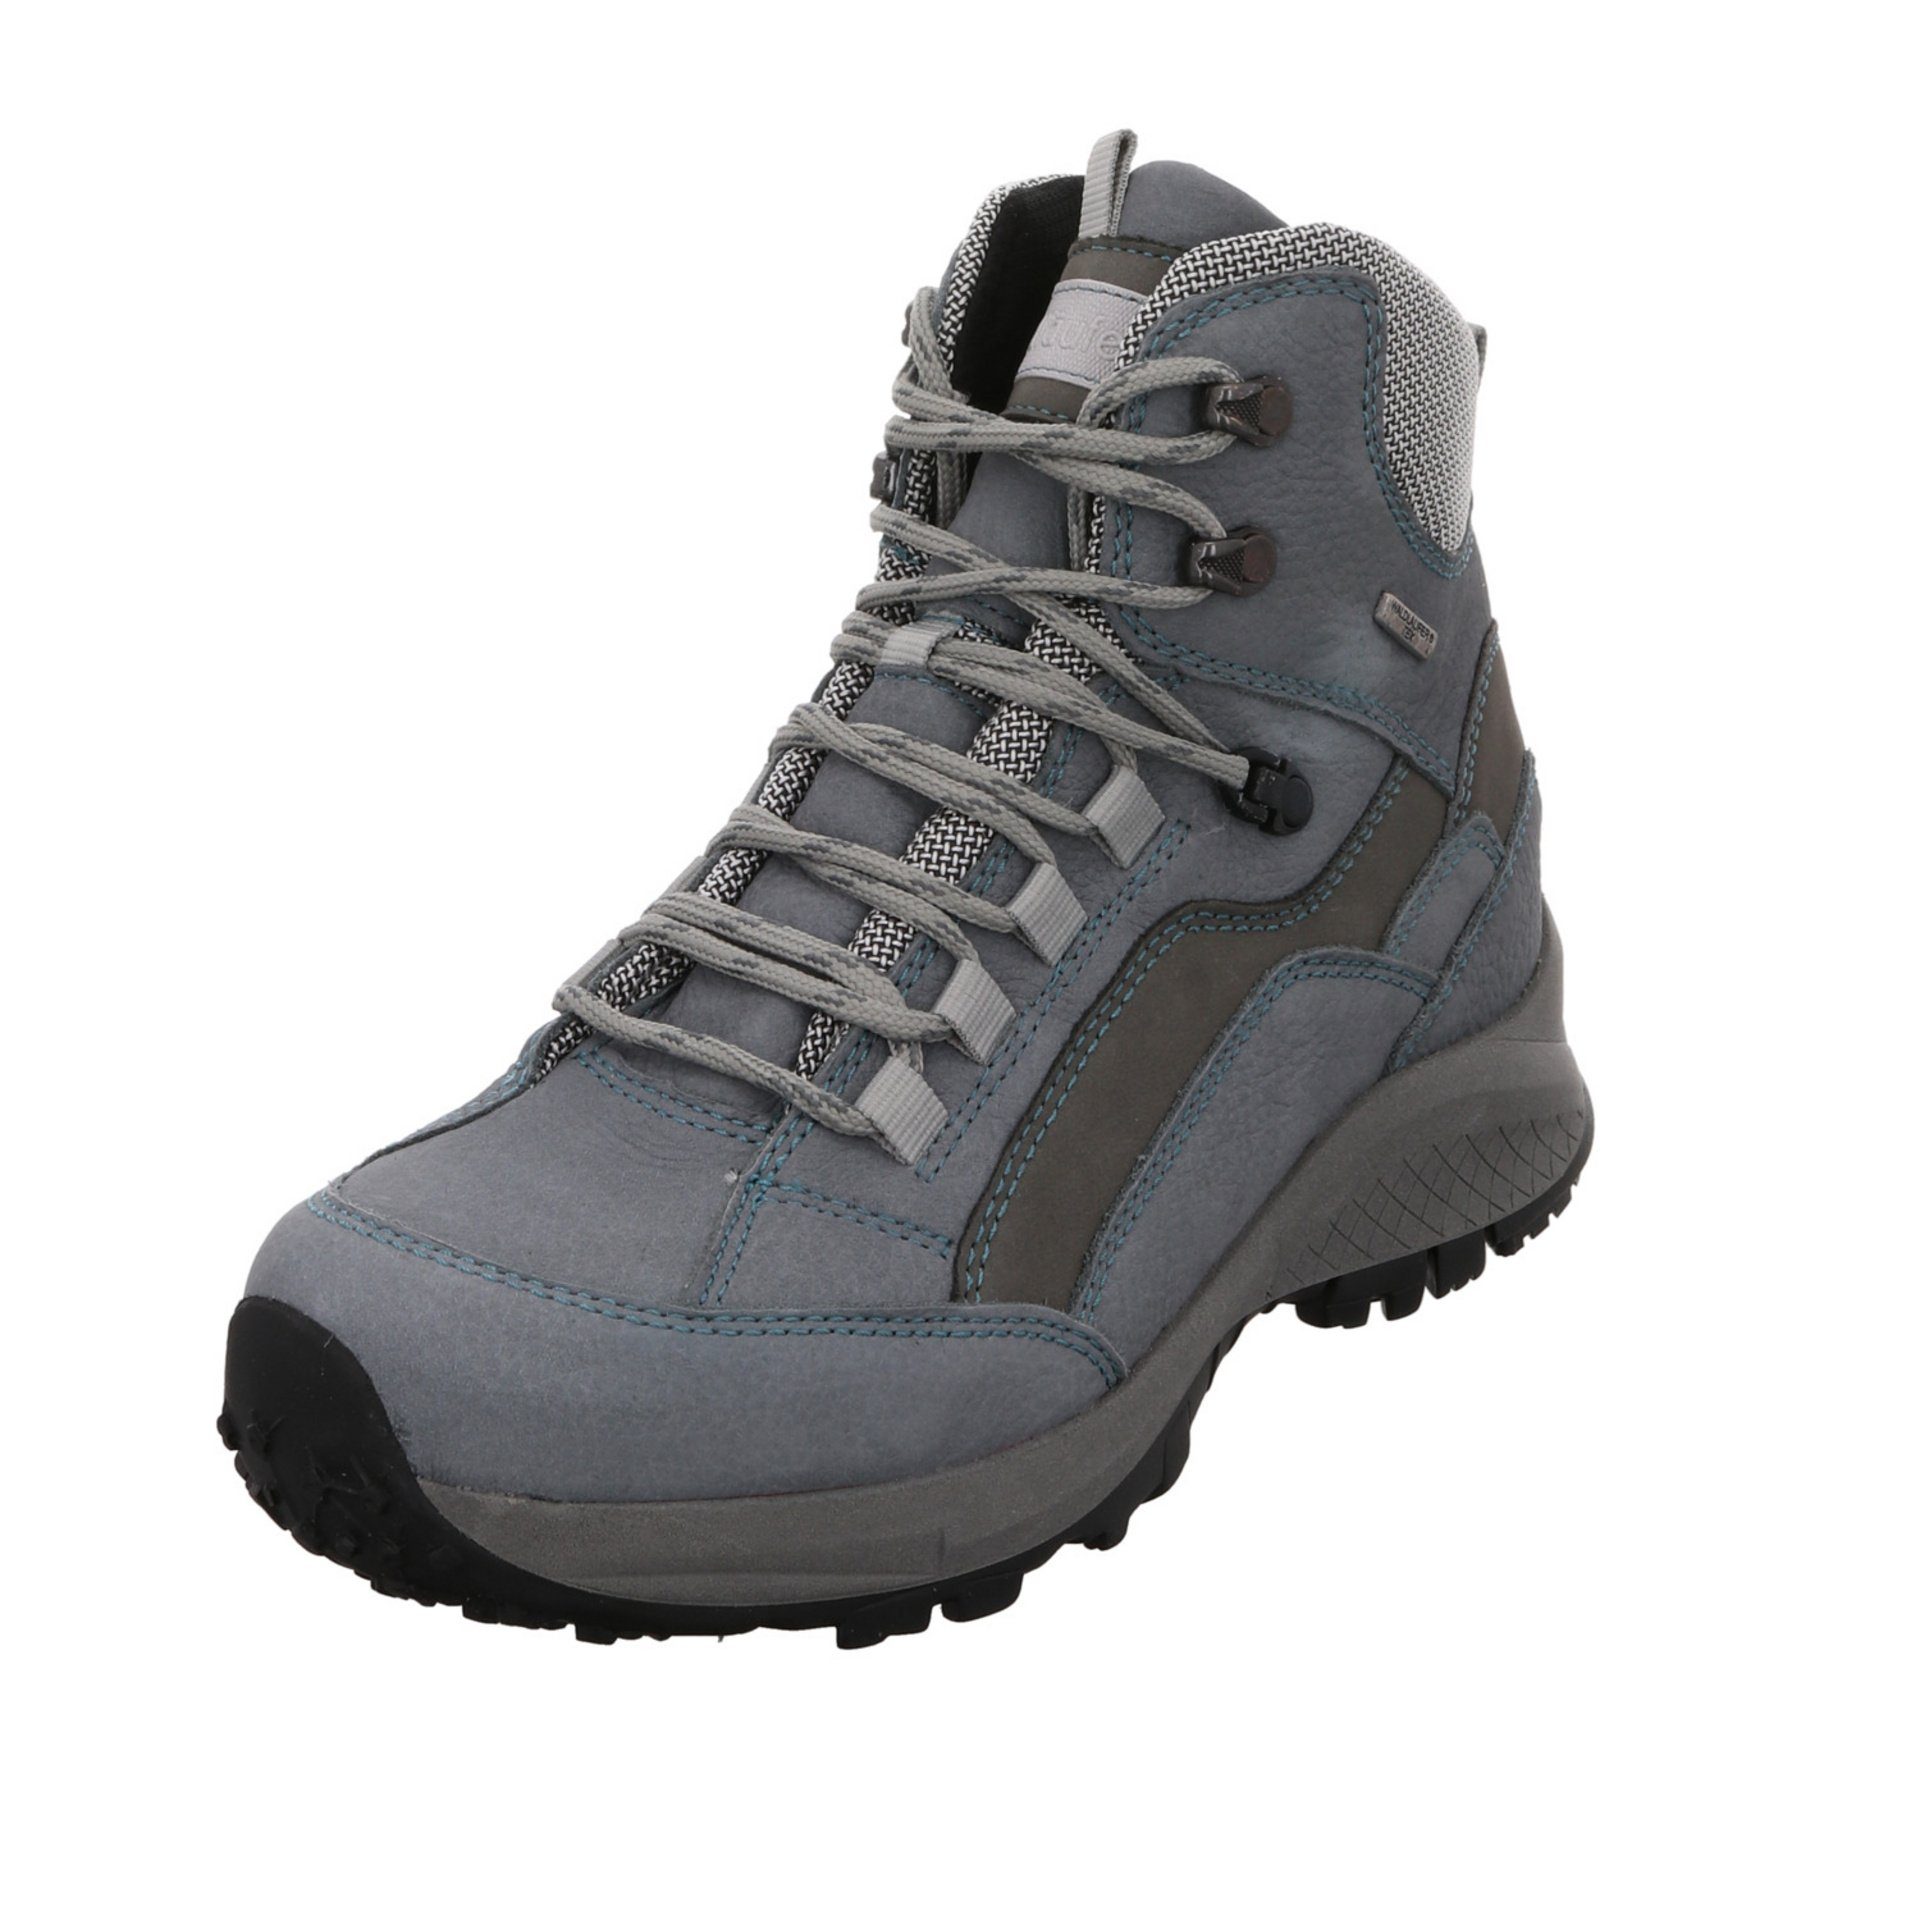 Waldläufer »Damen Schuhe Outdoor Emma Outdoorschuh« Outdoorschuh  Leder-/Textilkombination online kaufen | OTTO